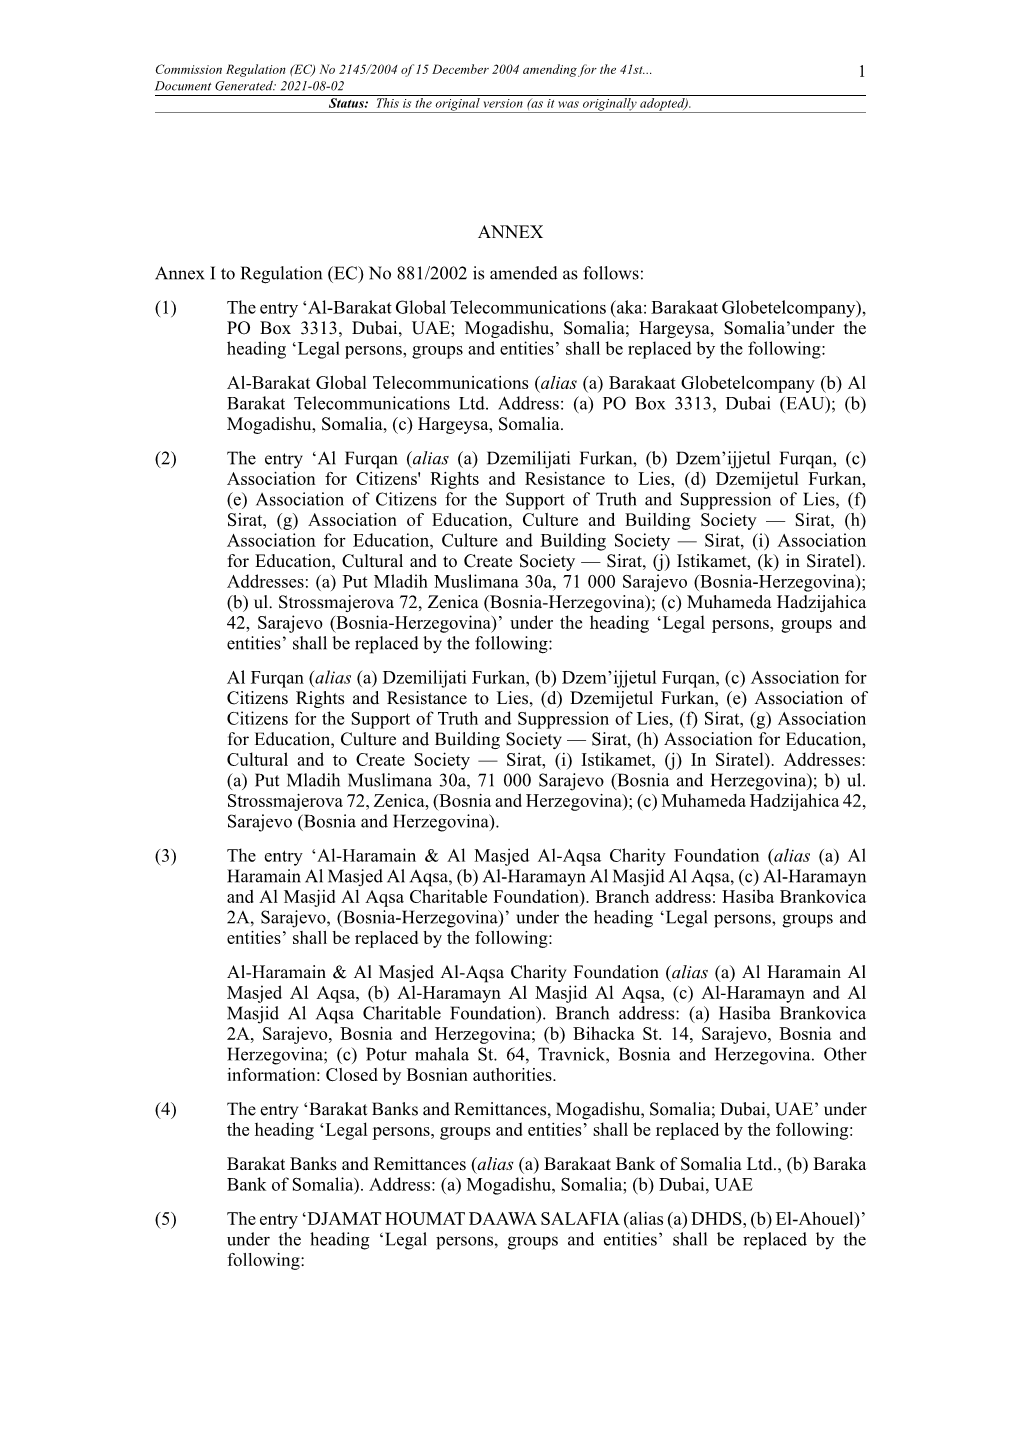 Commission Regulation (EC) No 2145/2004 of 15 December 2004 Amending for the 41St